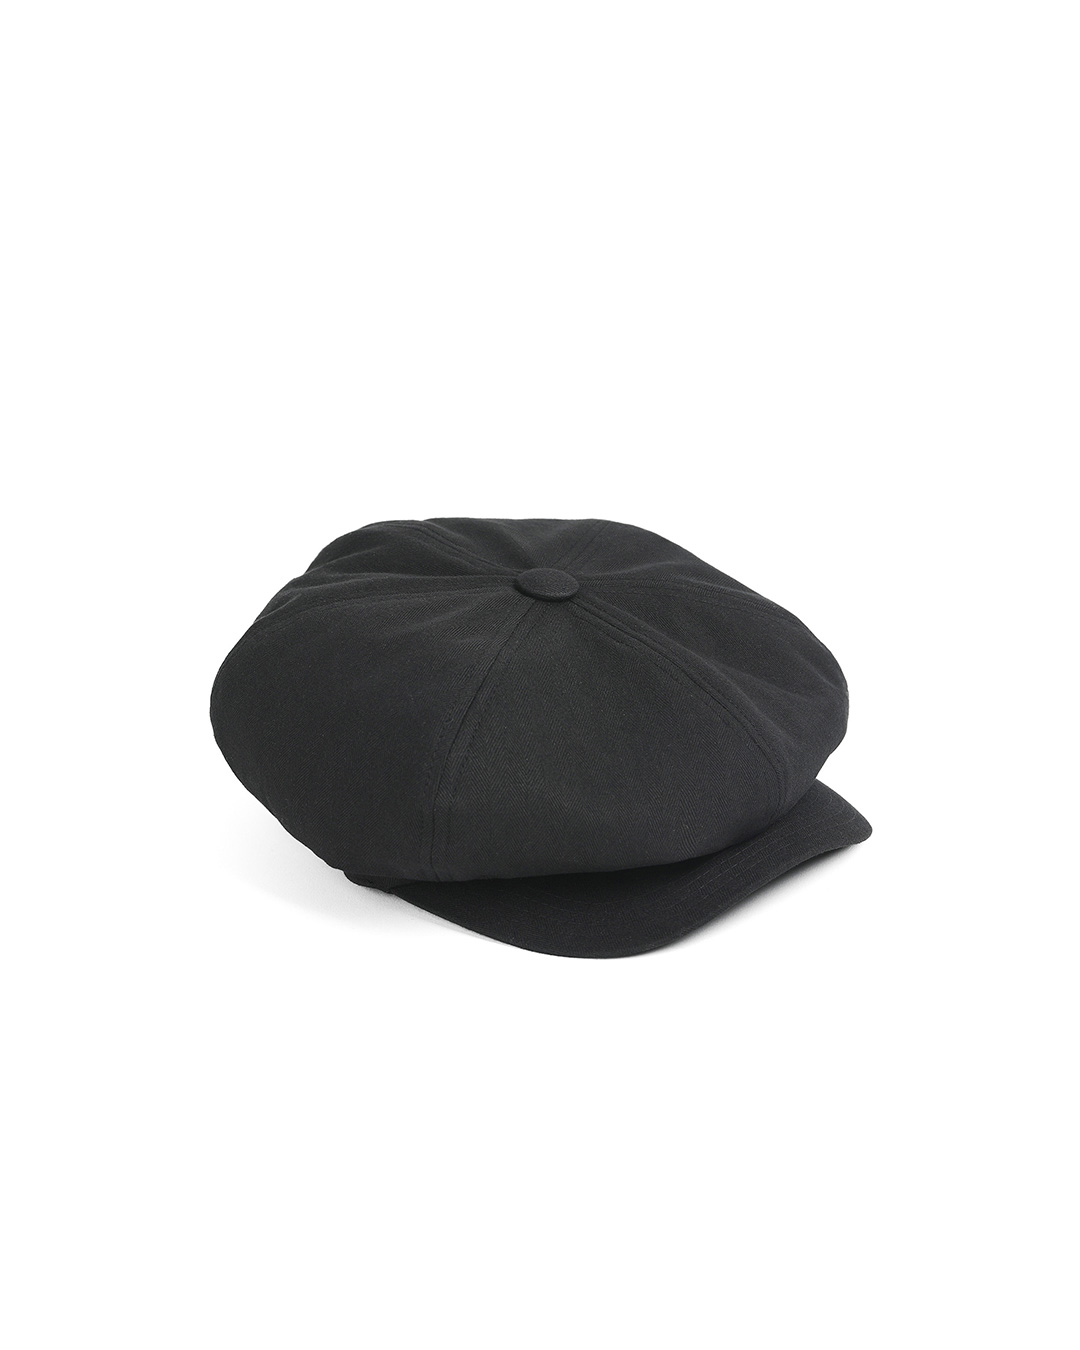 HBT NEWSBOY CAP (black)